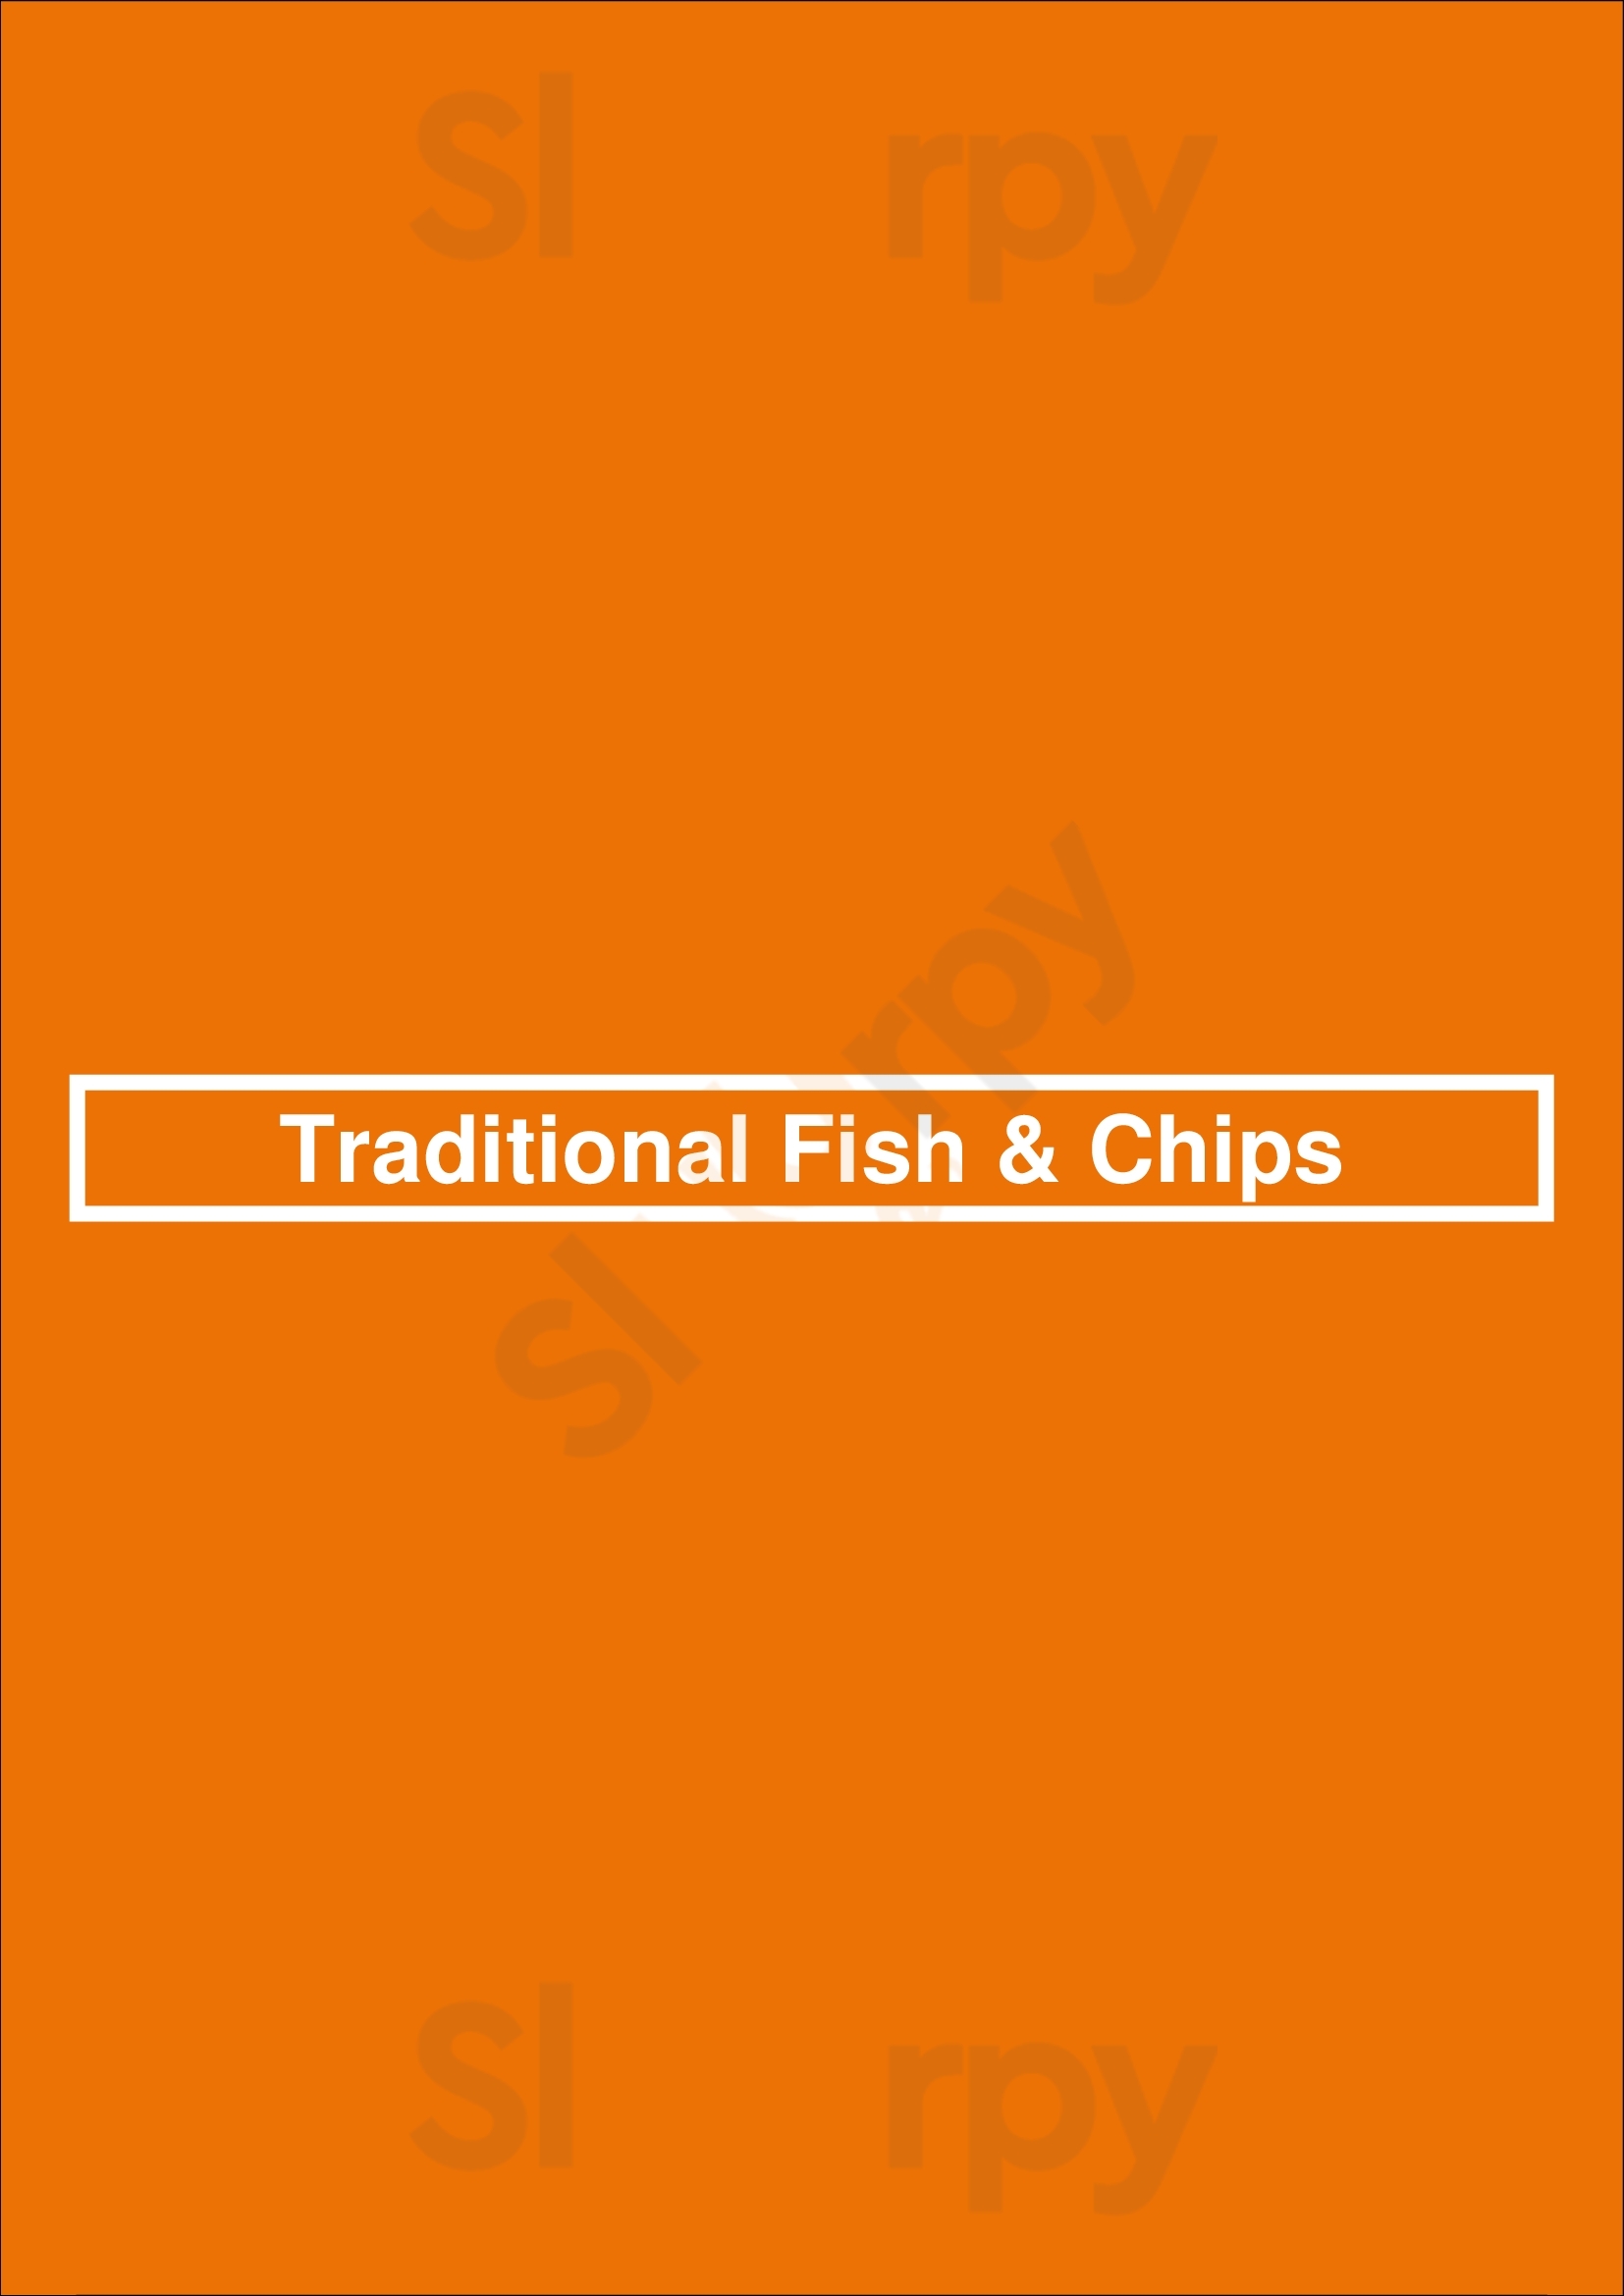 Traditional Fish & Chips Mississauga Menu - 1